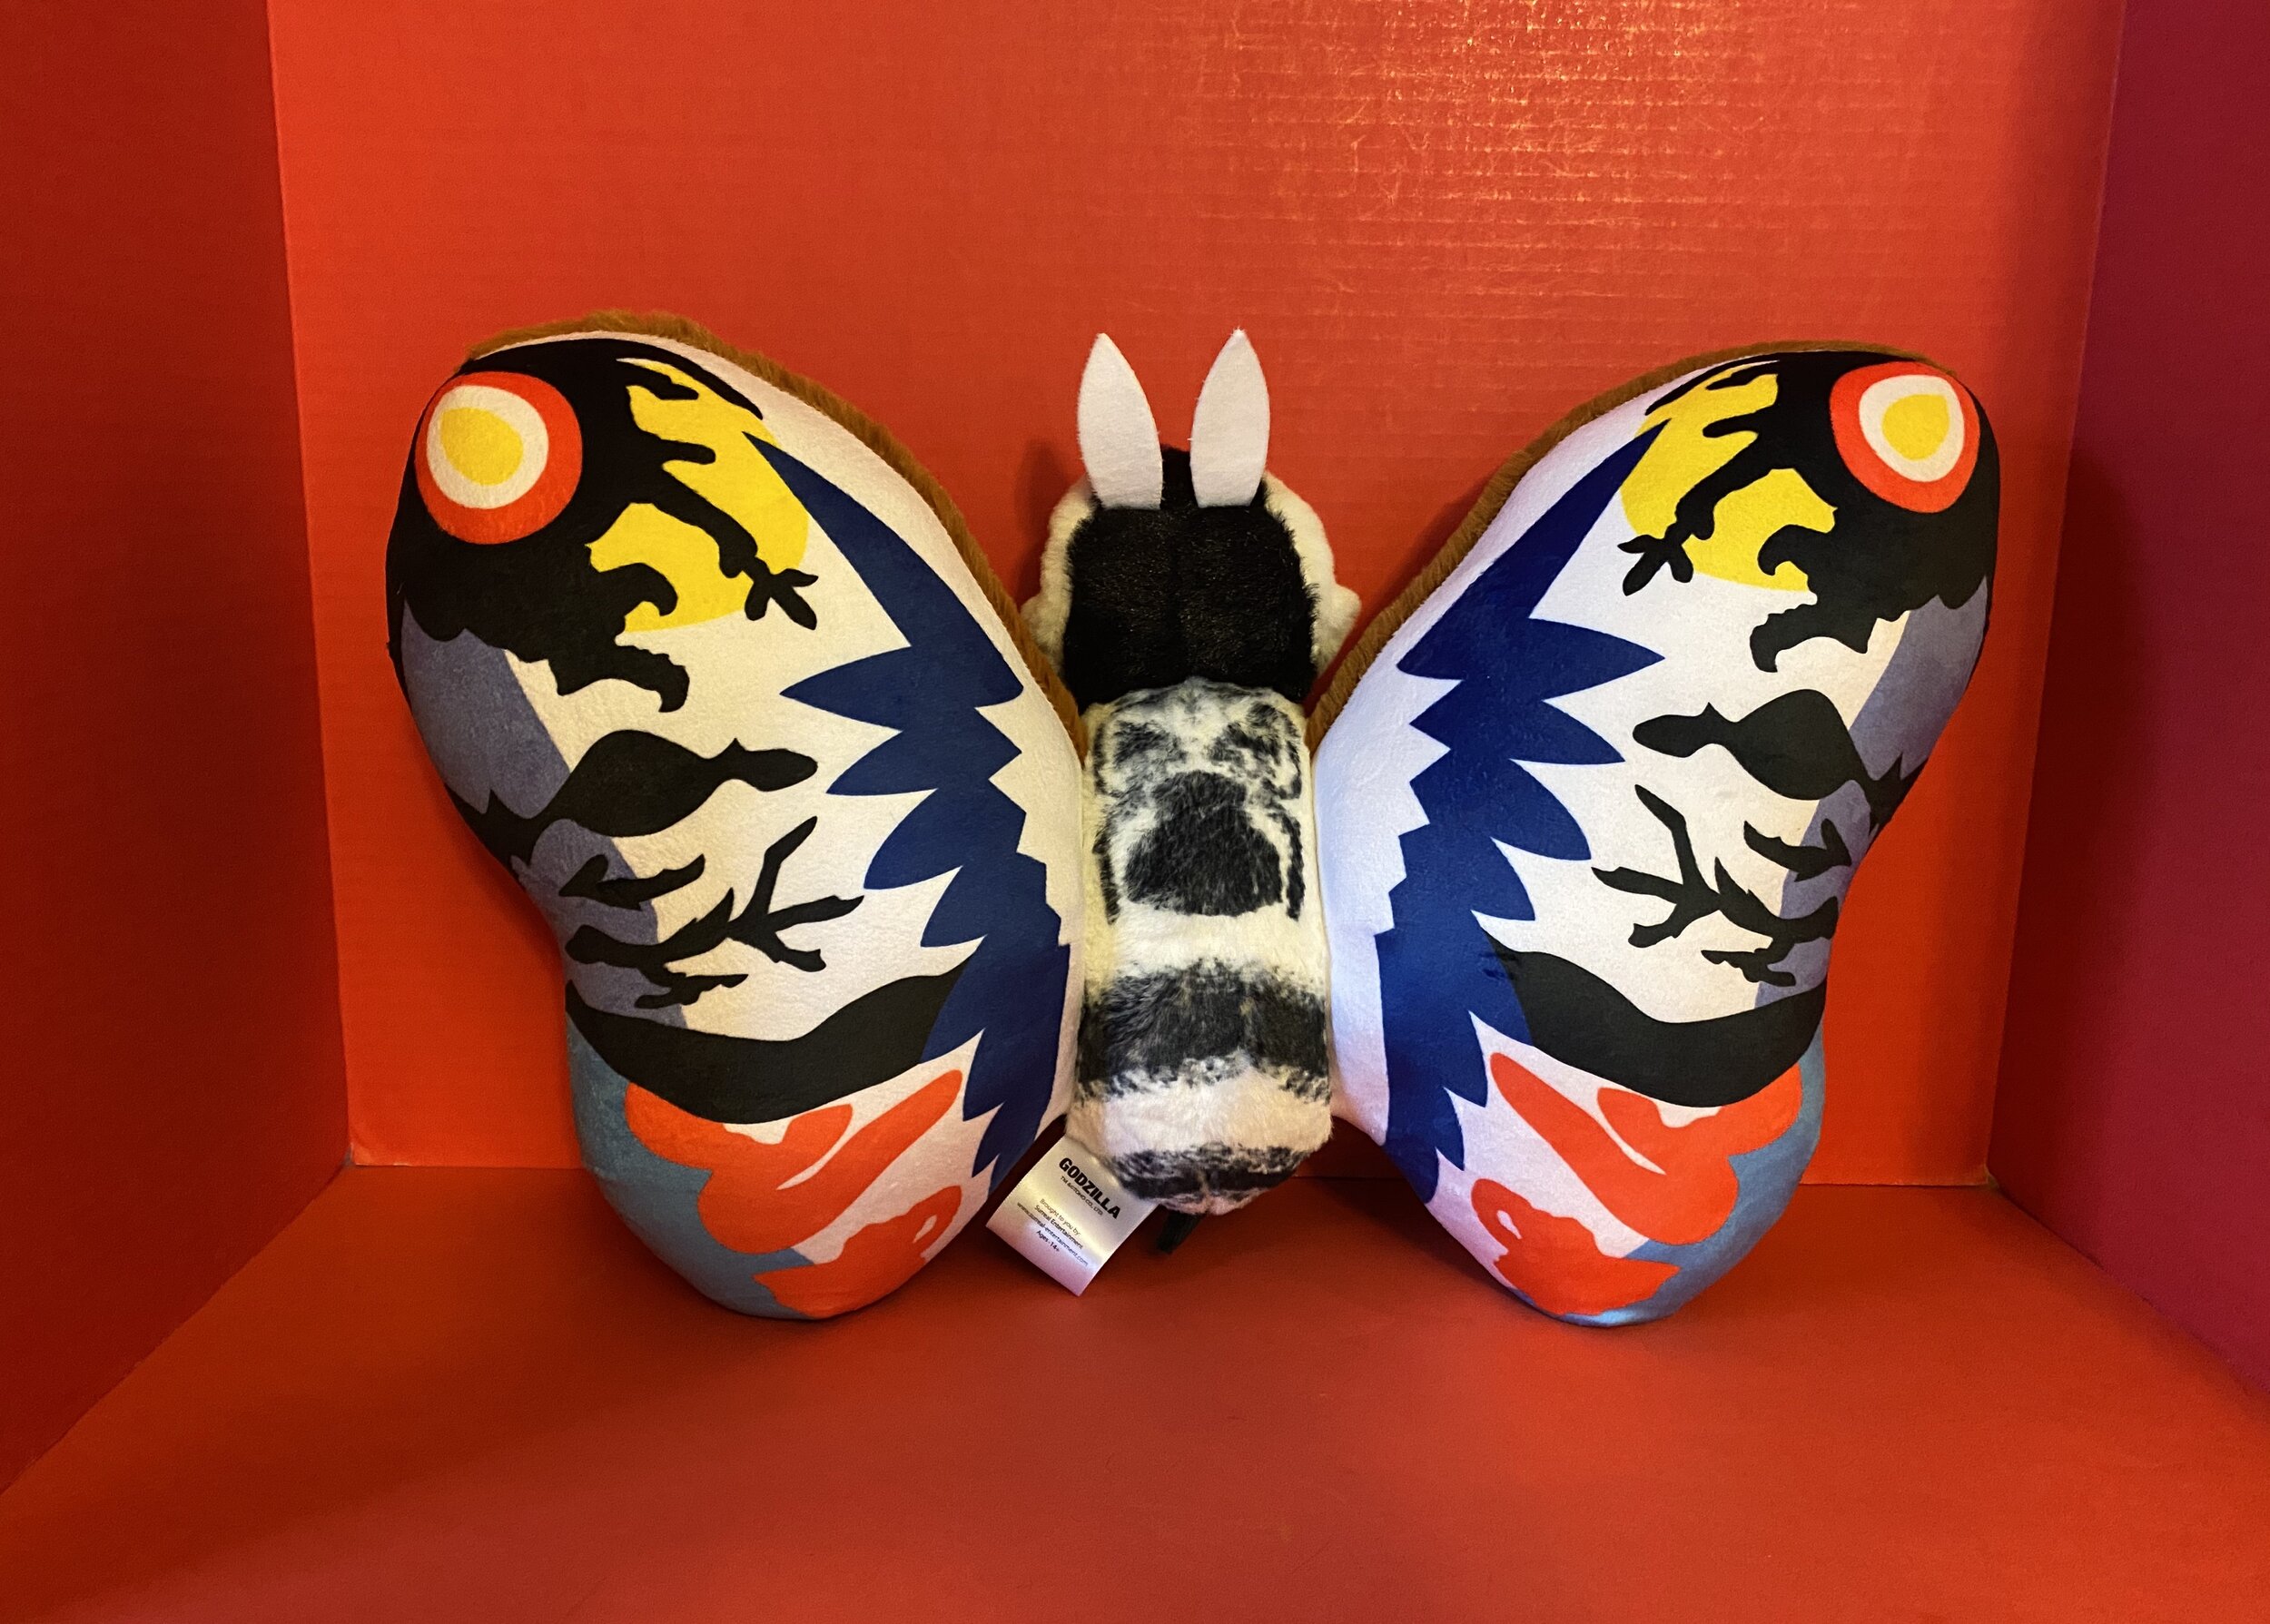 TOHO Godzilla Rainbow Mothra 22 inch Jumbo Plush Toy for sale online